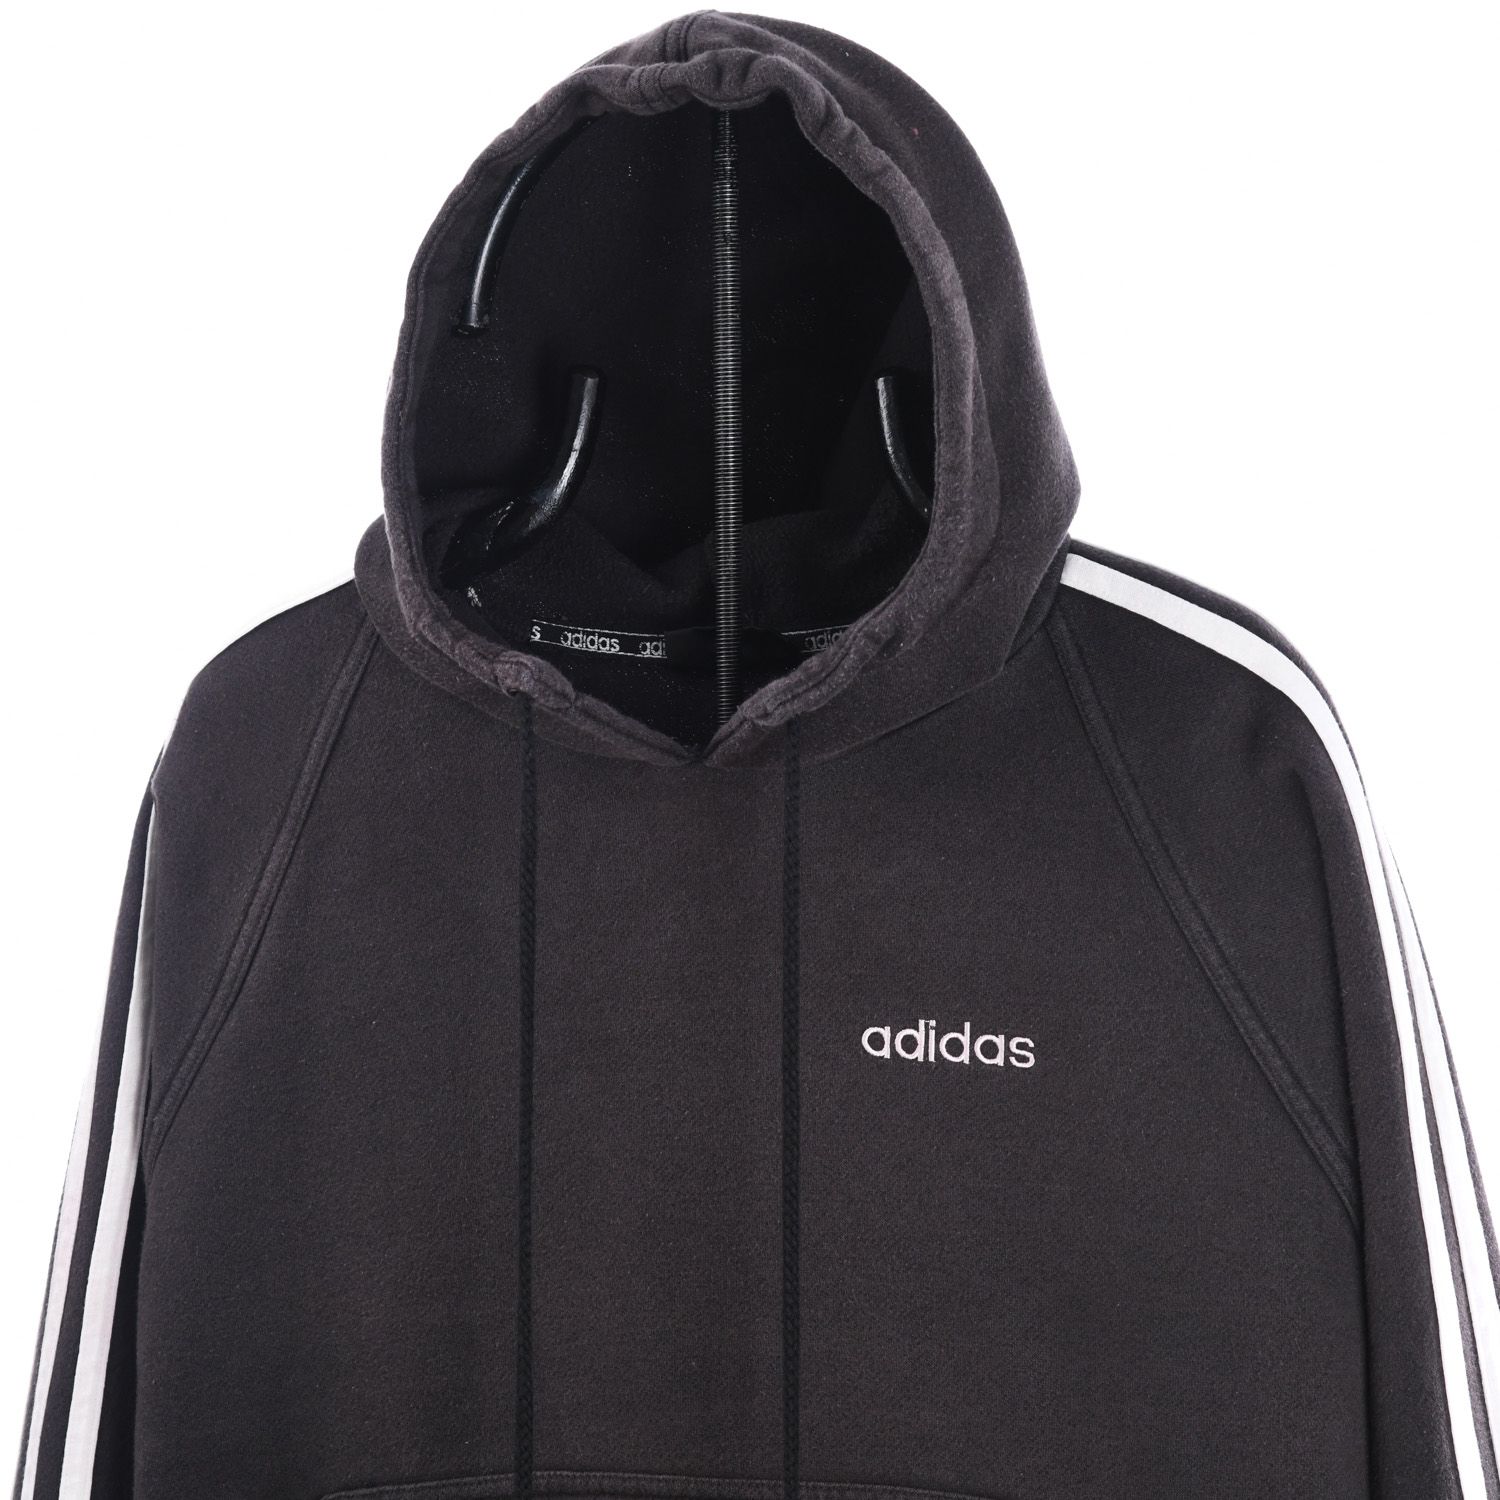 Adidas Late 1990s Hoodie